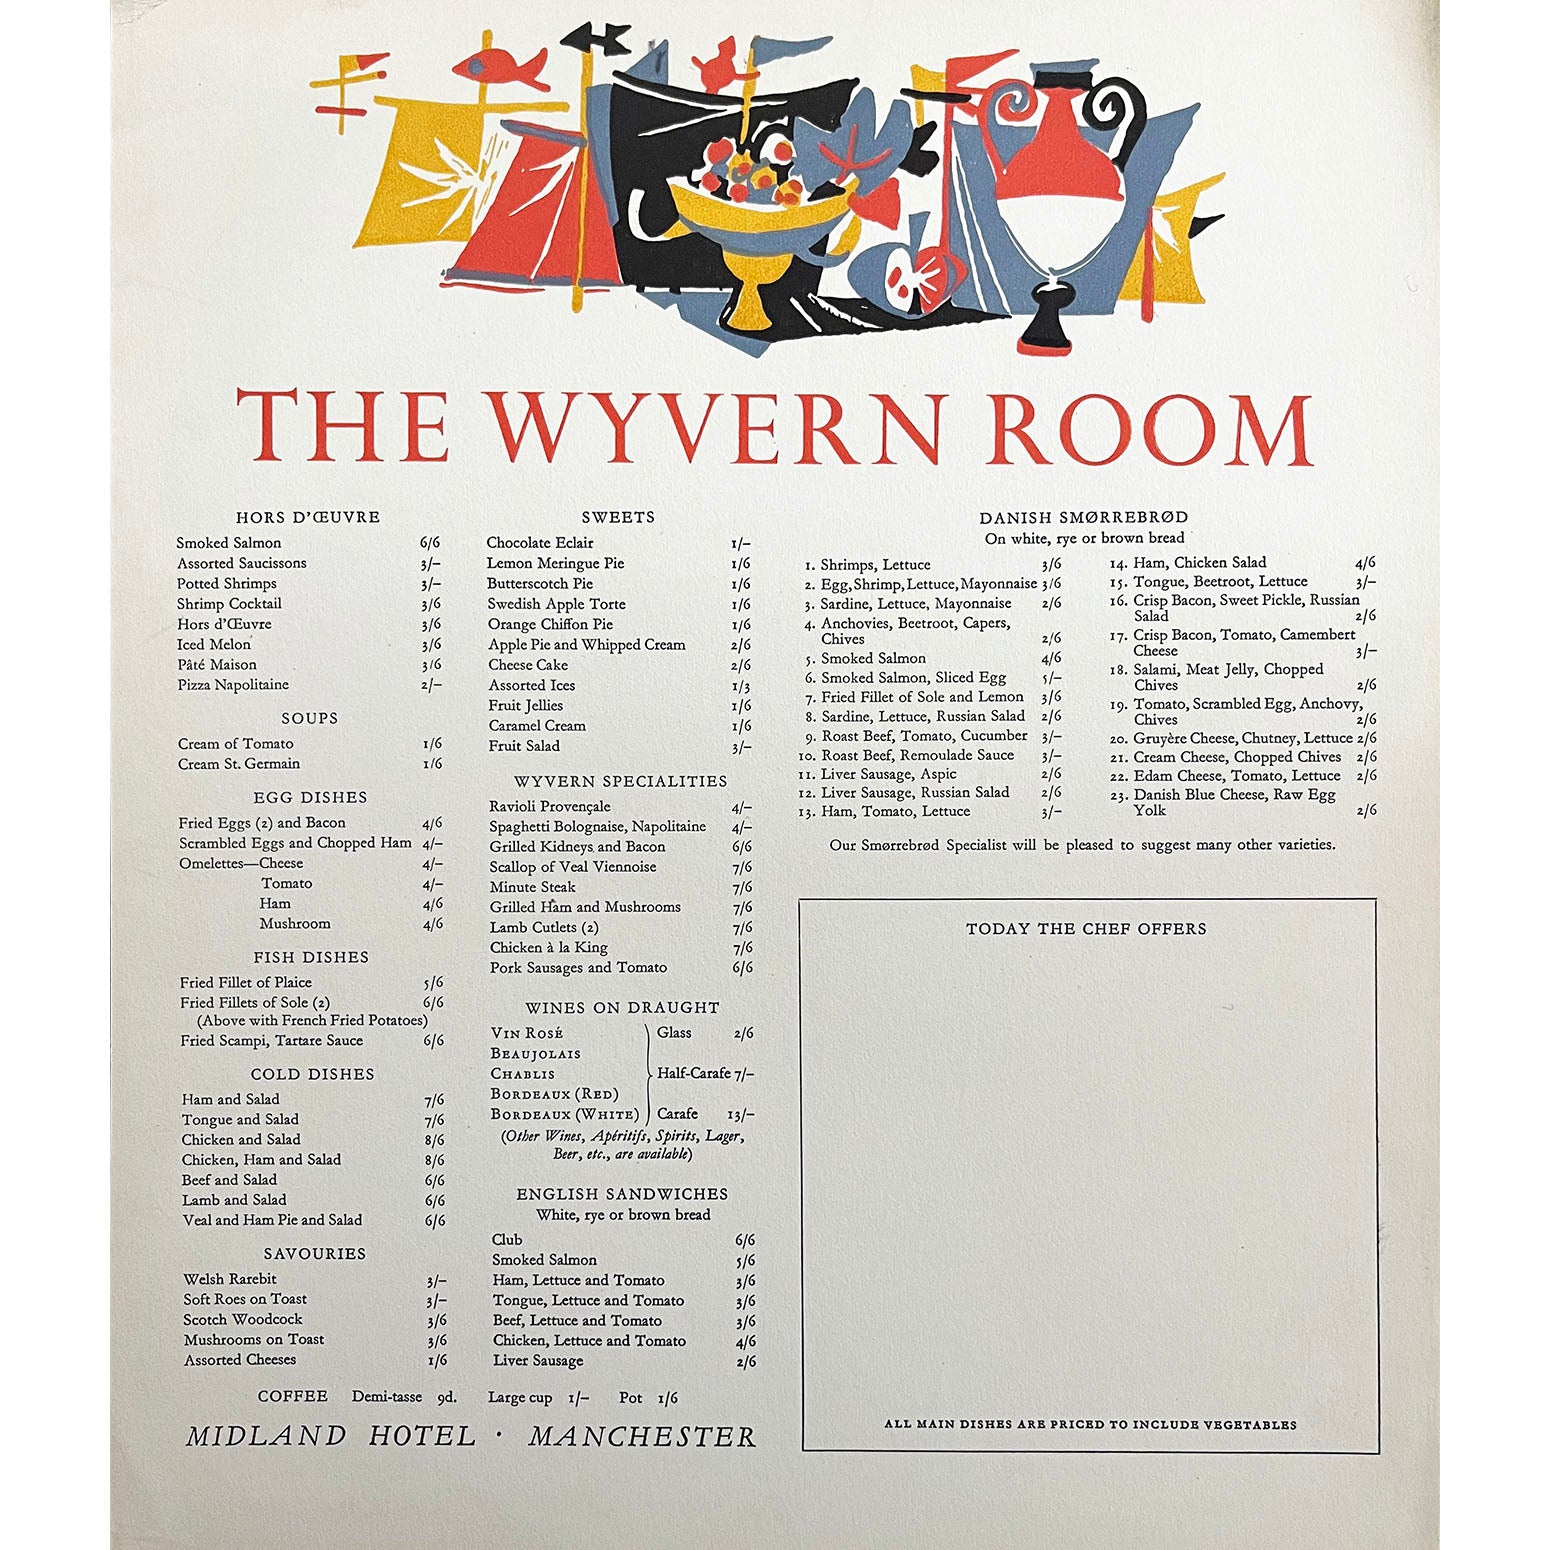 original railway hotel menu for the Wyvern Room Restaurant, Midland Hotel, Manchester, c. 1960